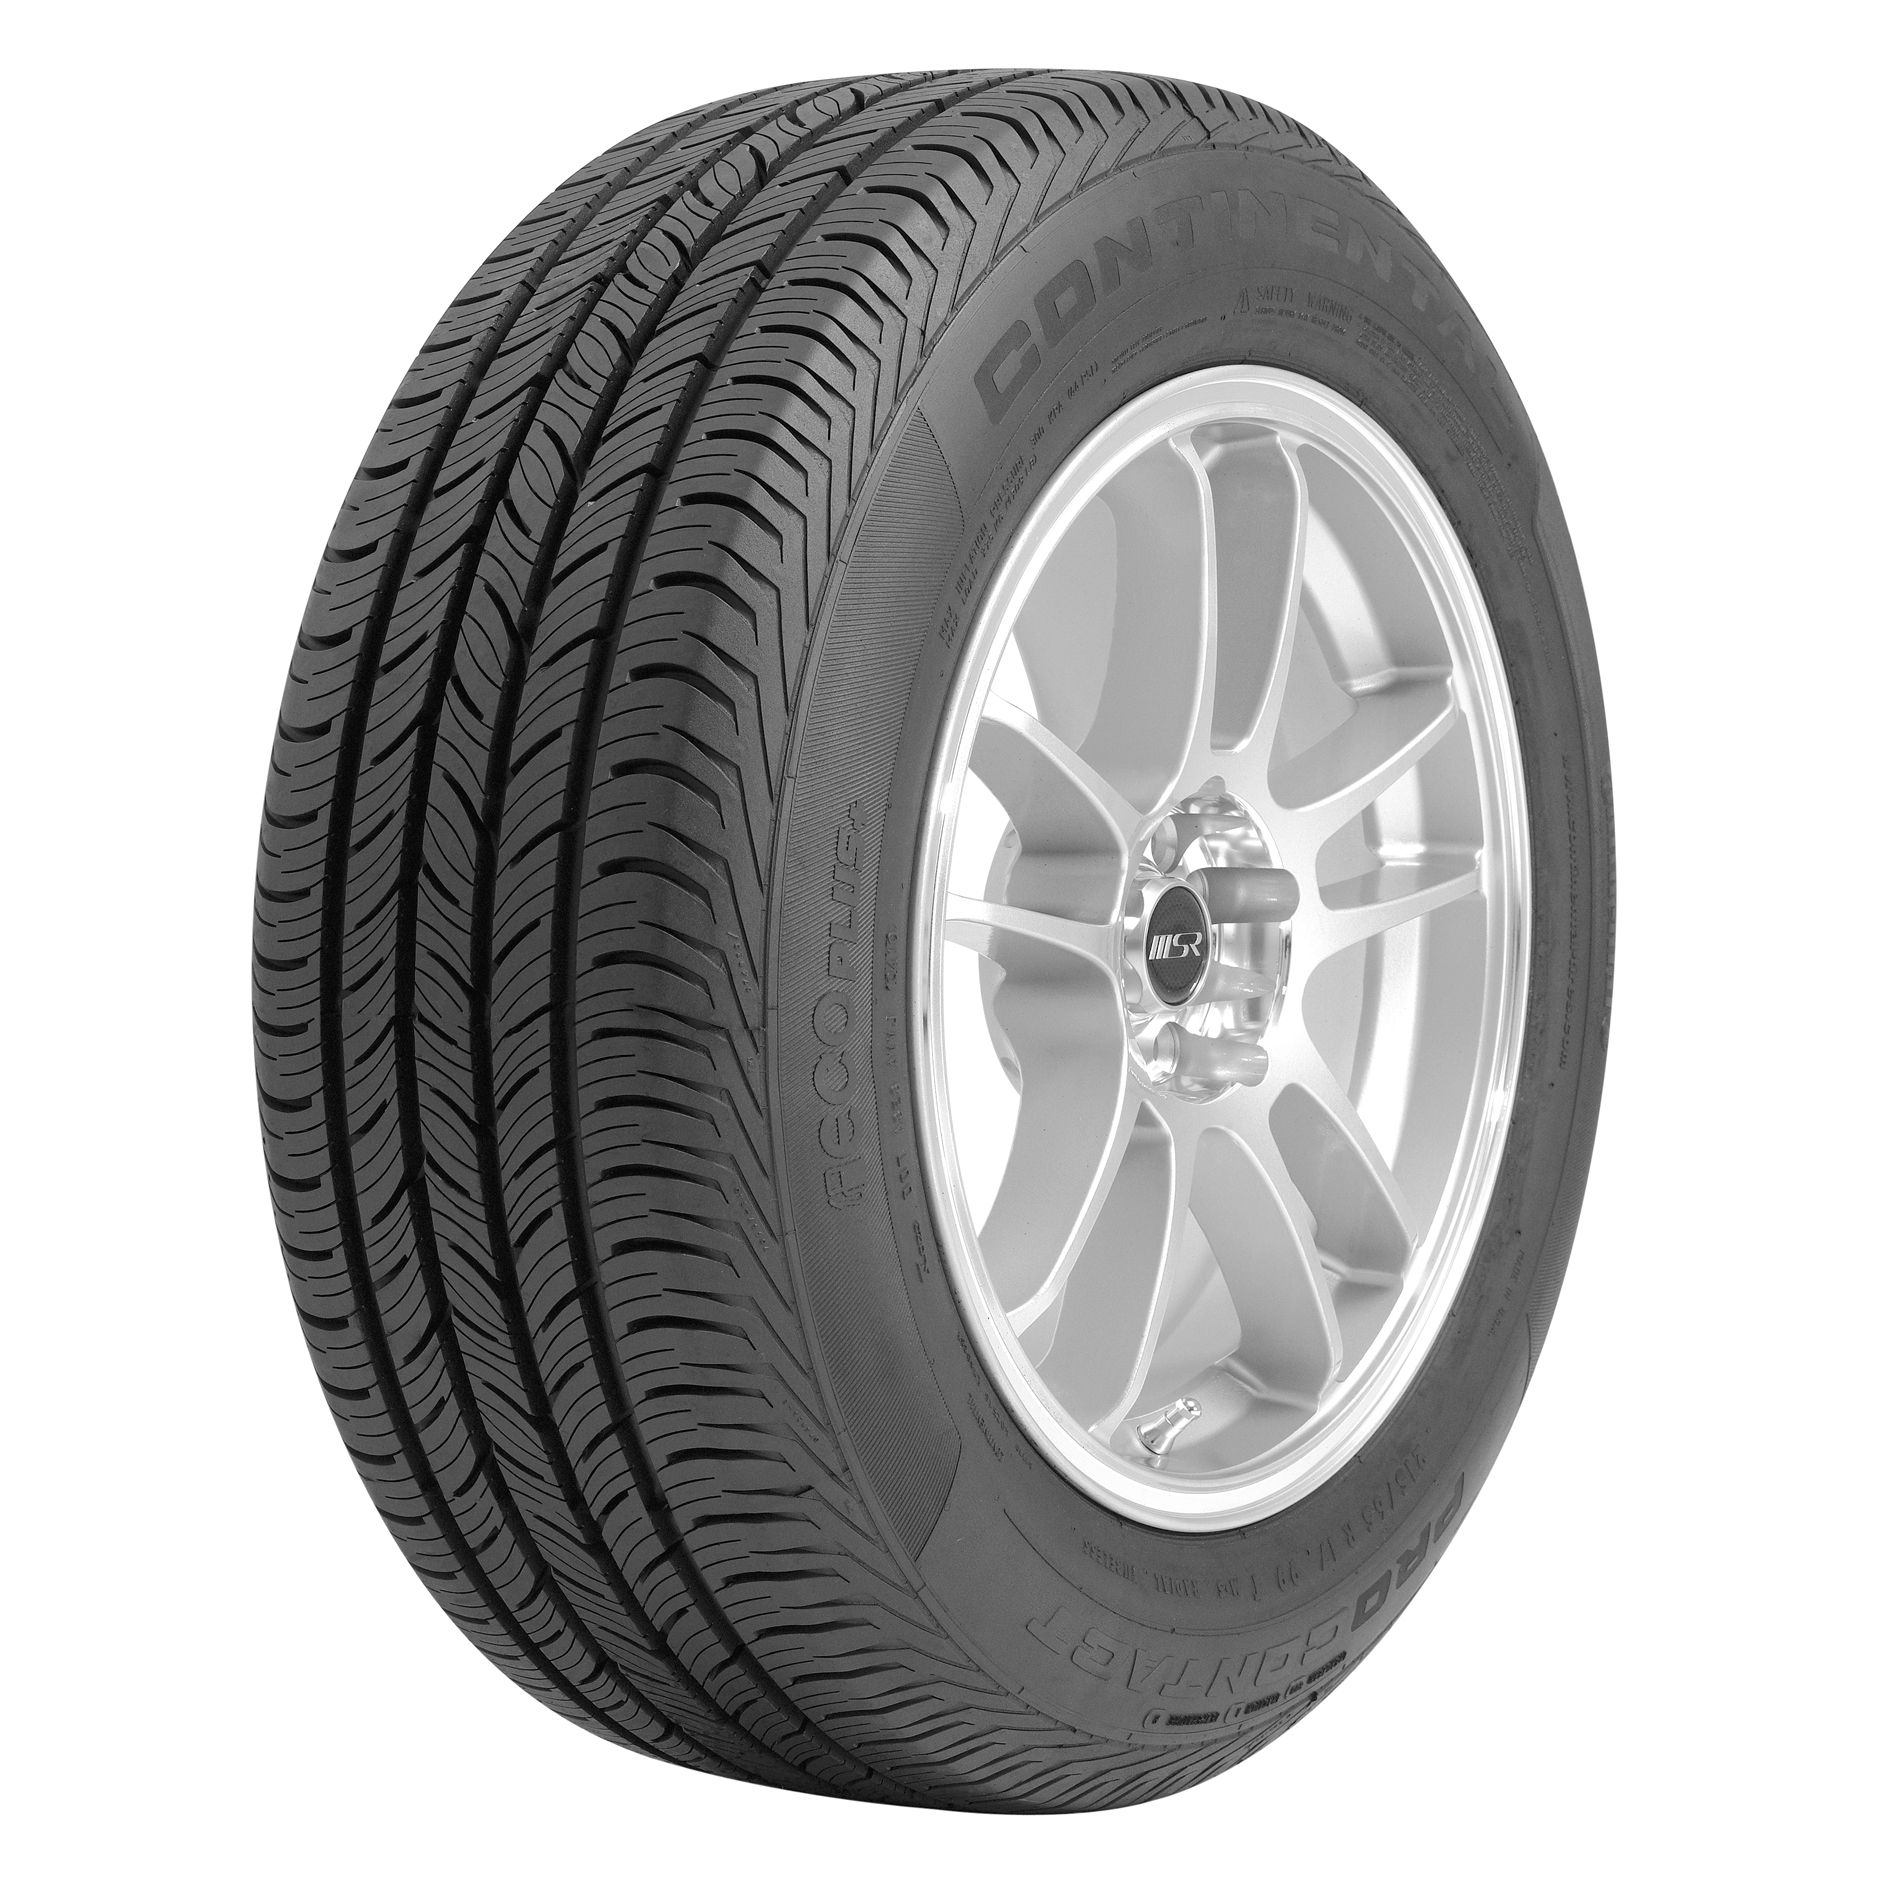 Continental Pro Contact Eco Plus - 235/50R17 96T BW - All-Season Tire